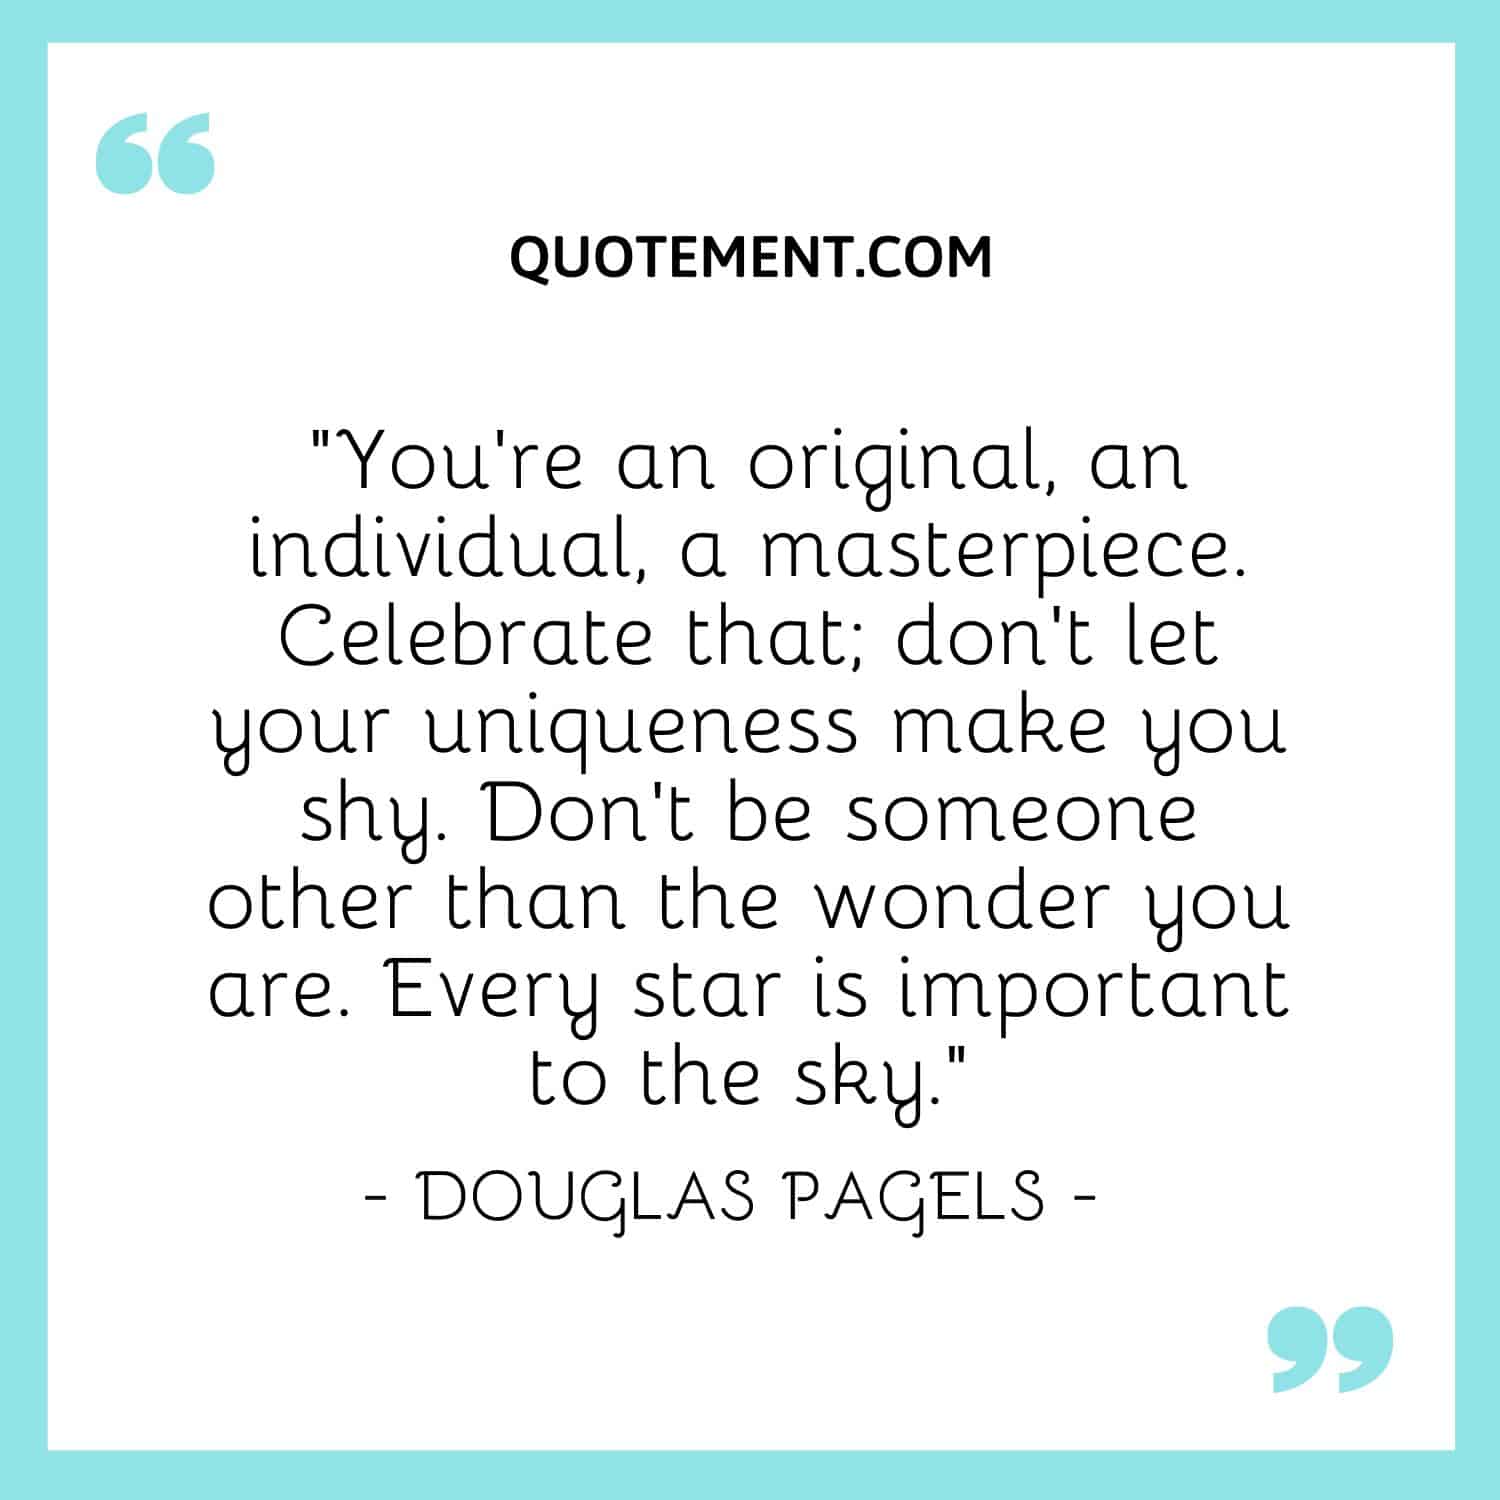 You're an original, an individual, a masterpiece.